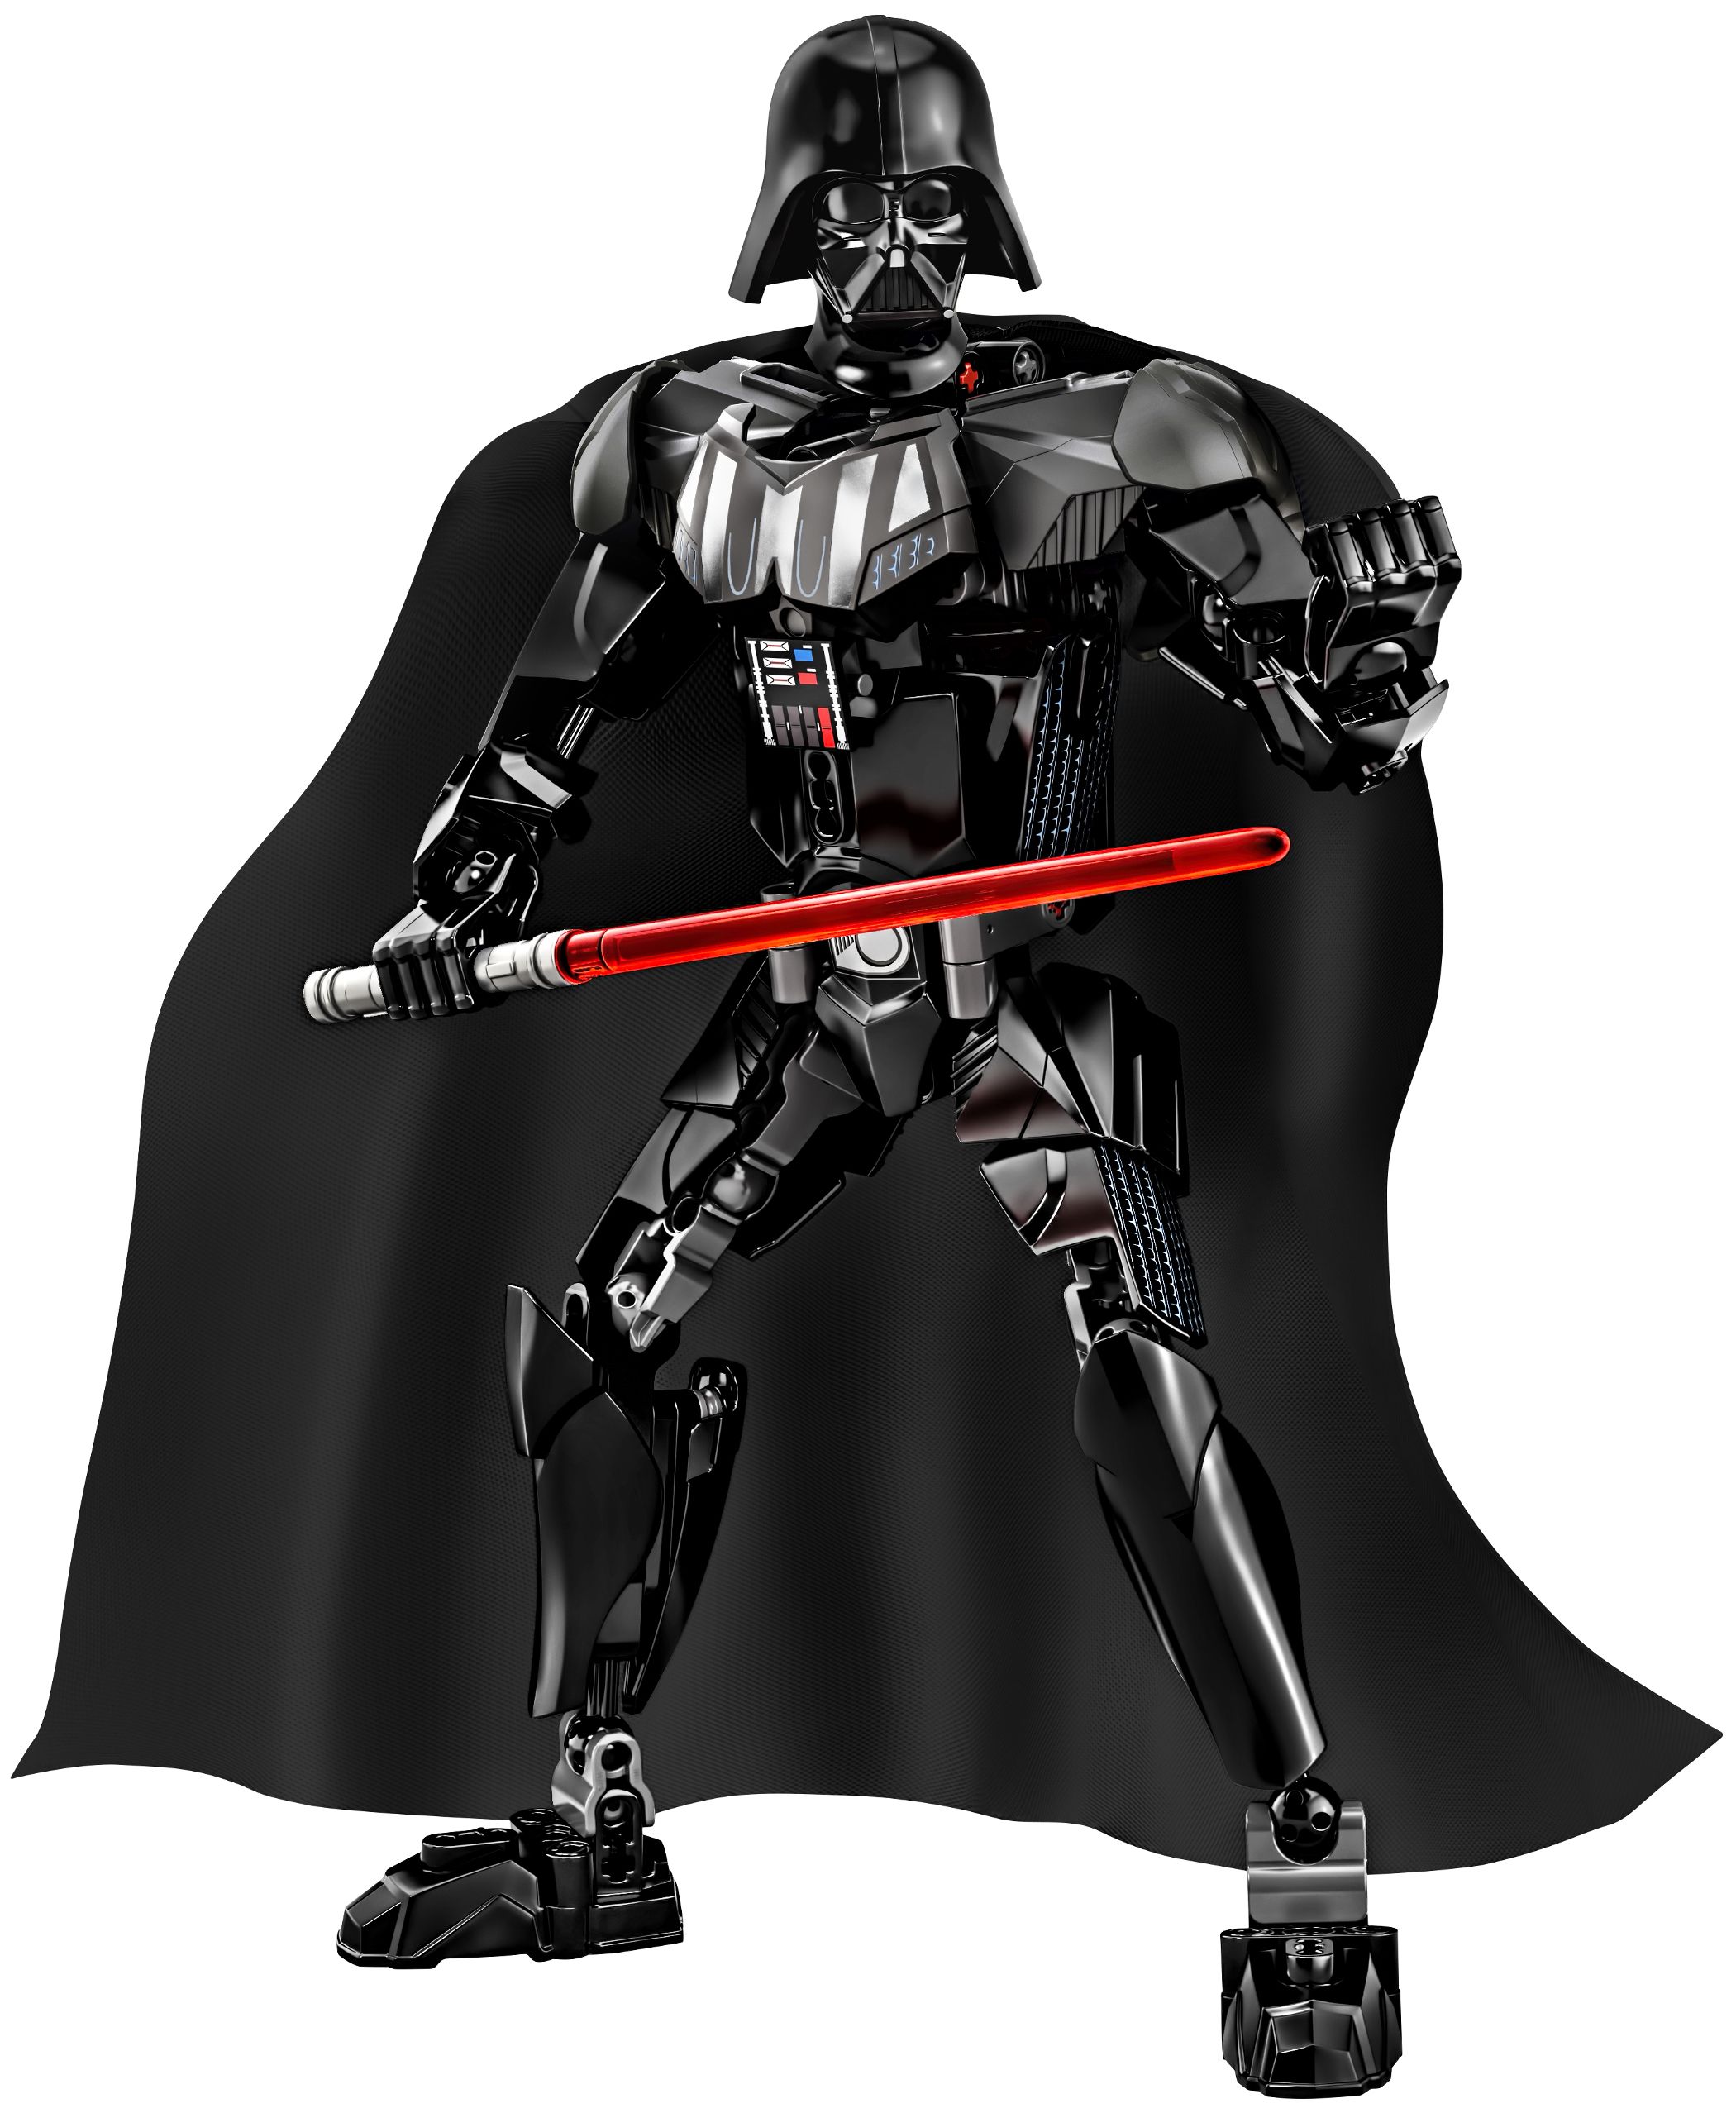 Jouet Star Wars 30cm Figurine Dark Vador Star Wars 9 L’Ascension de Skywalker 